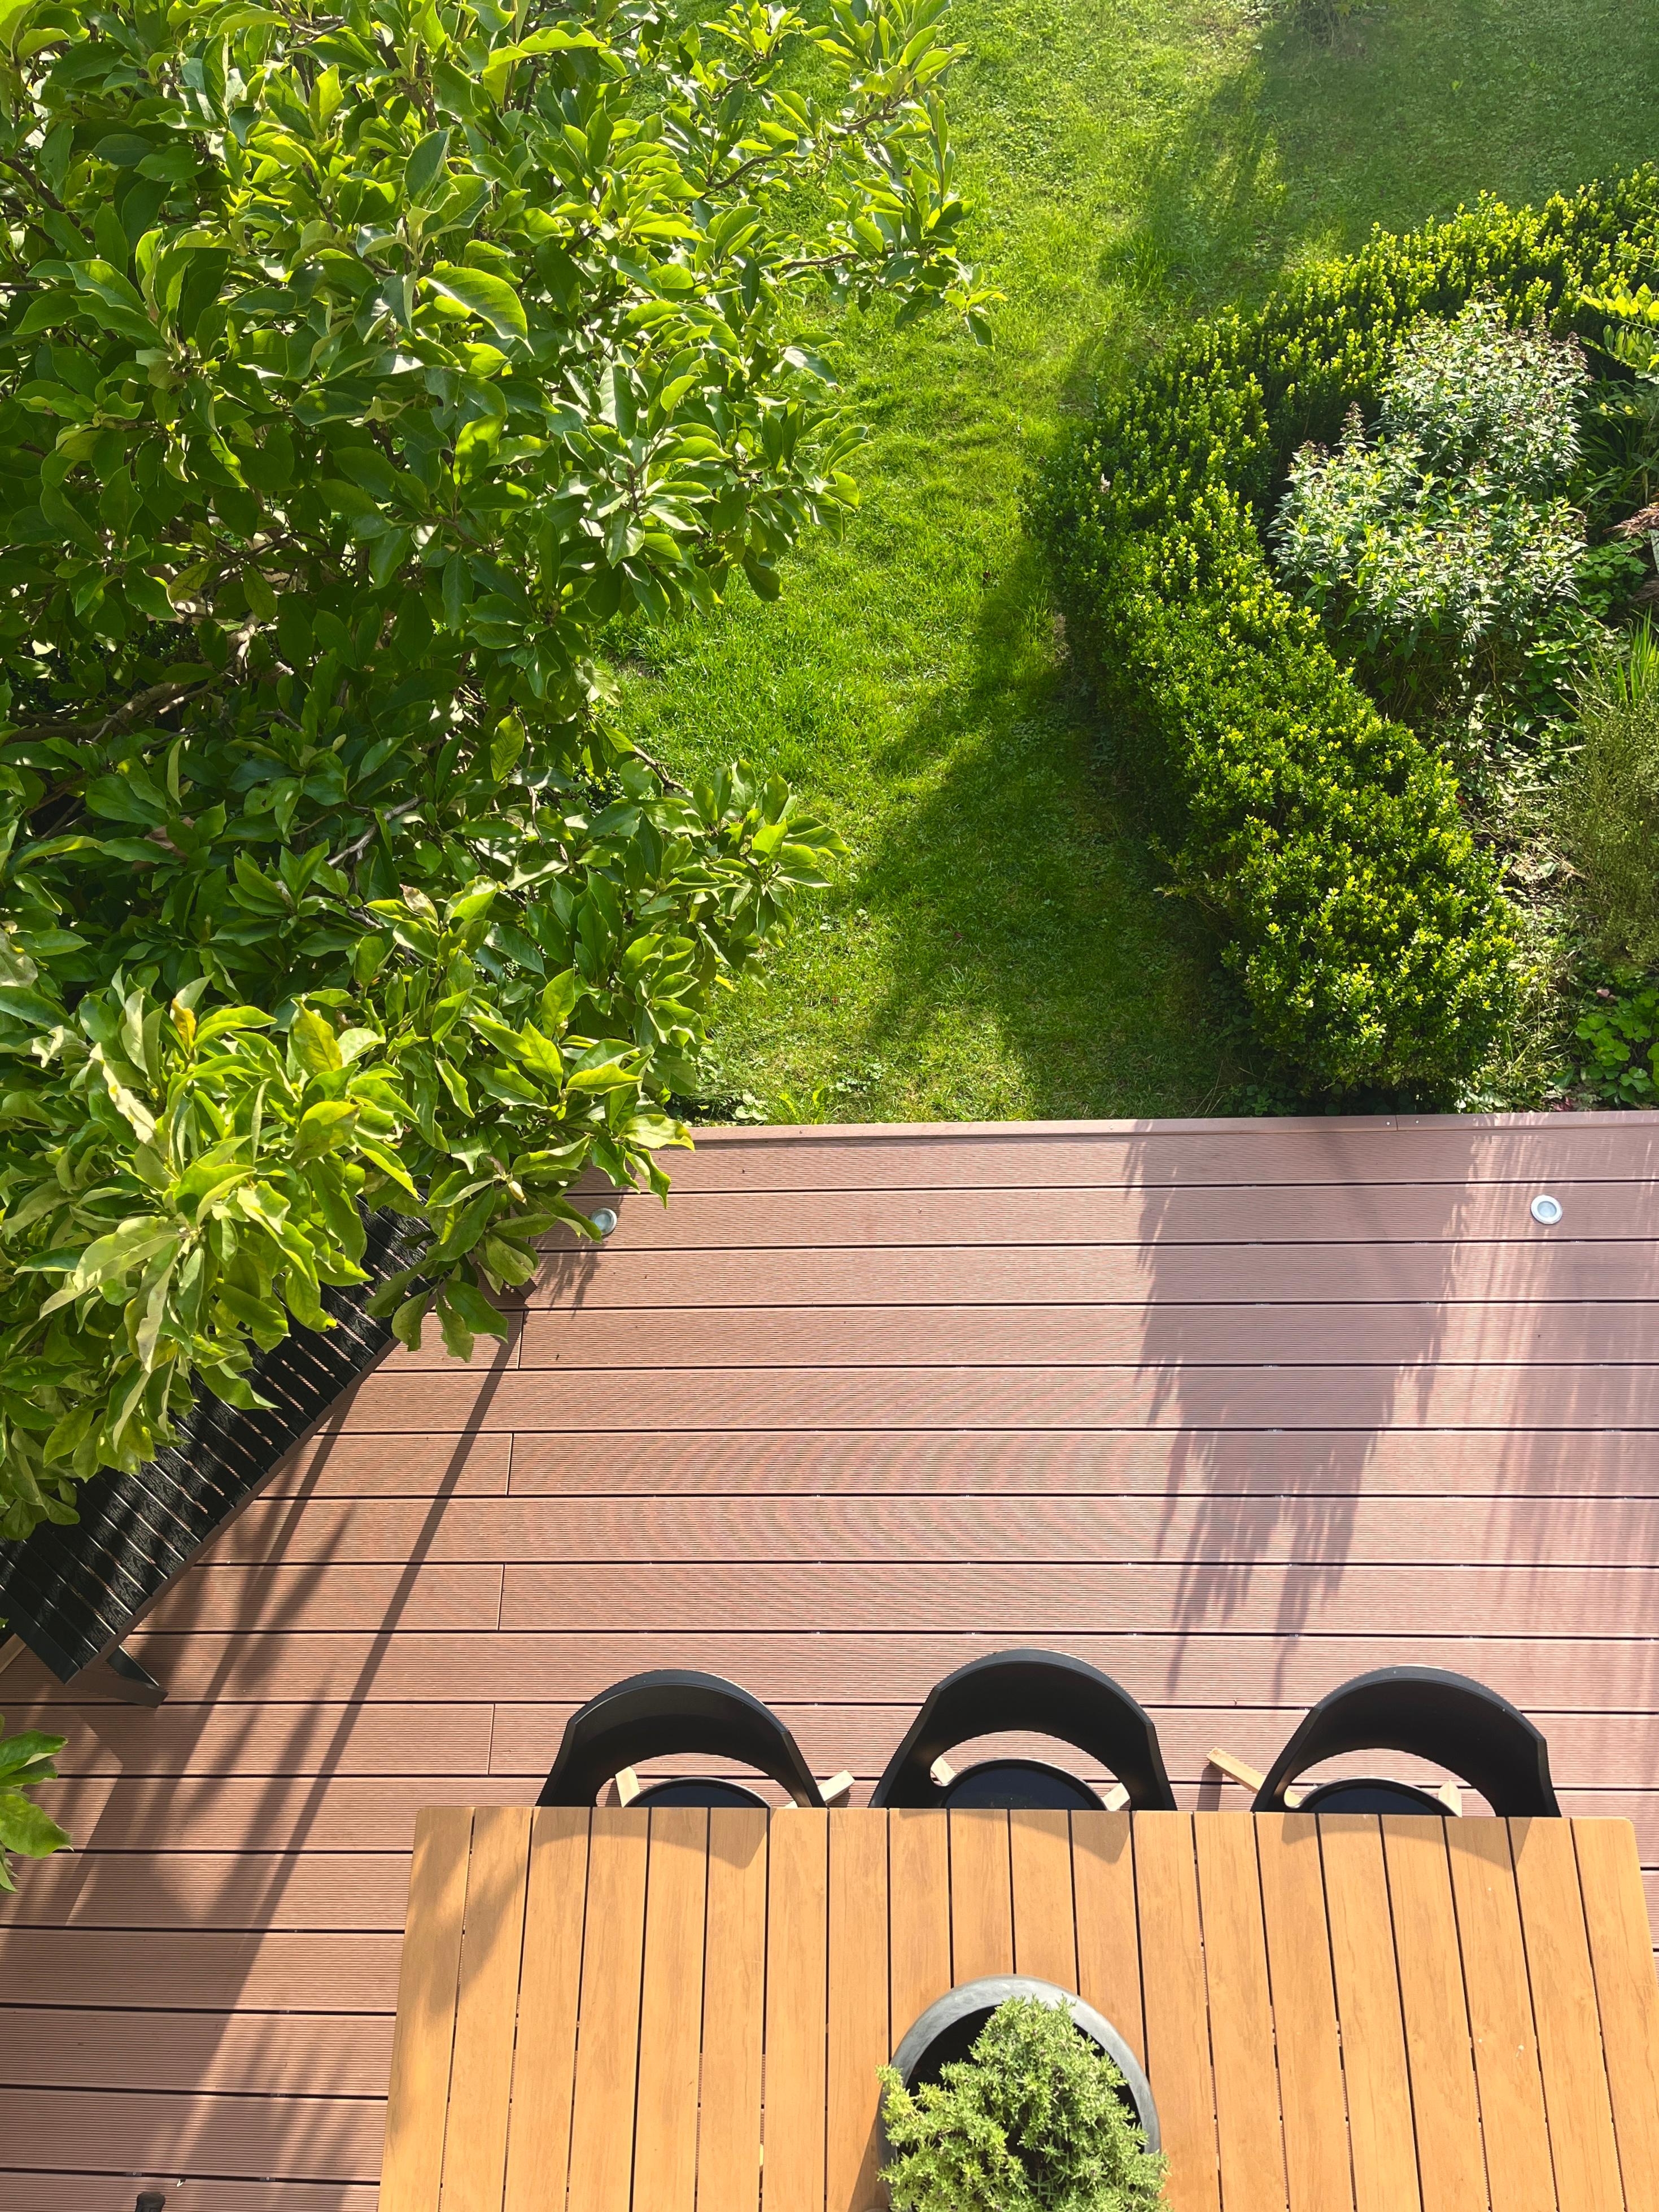 Feierabend 🌾
#terrassengestaltung#garten#wpc#lavendel#feierabend#outdoorliving#magnolie#happyplace#abendsonne